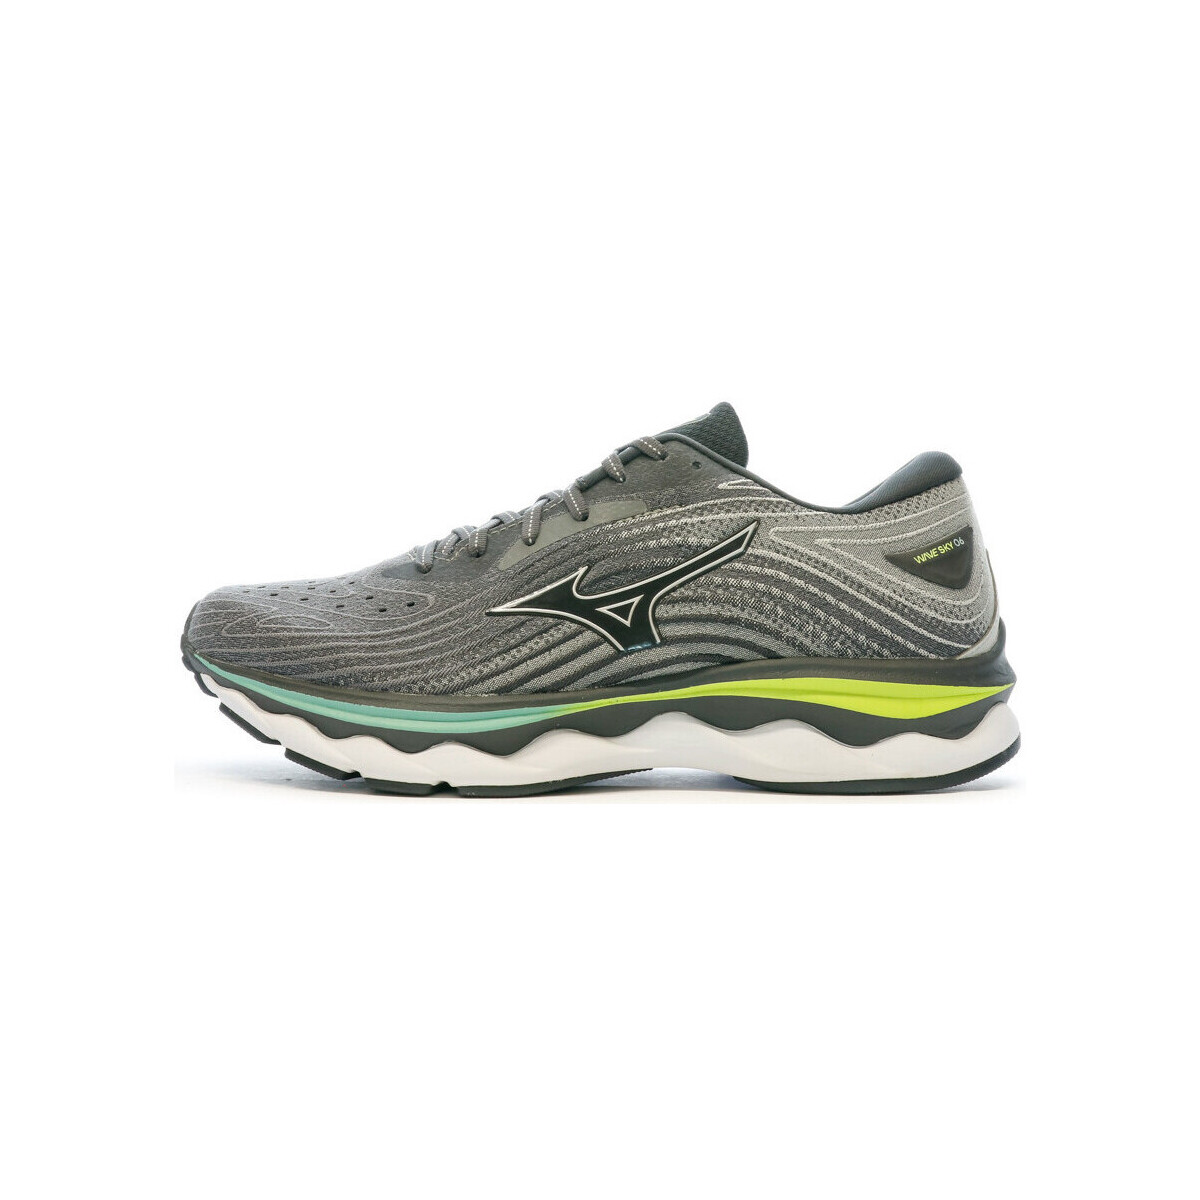 Chaussures Homme Mizuno Wave Sky 5 Ανδρικά Παπούτσια για Τρέξιμο J1GC2202-04 Gris